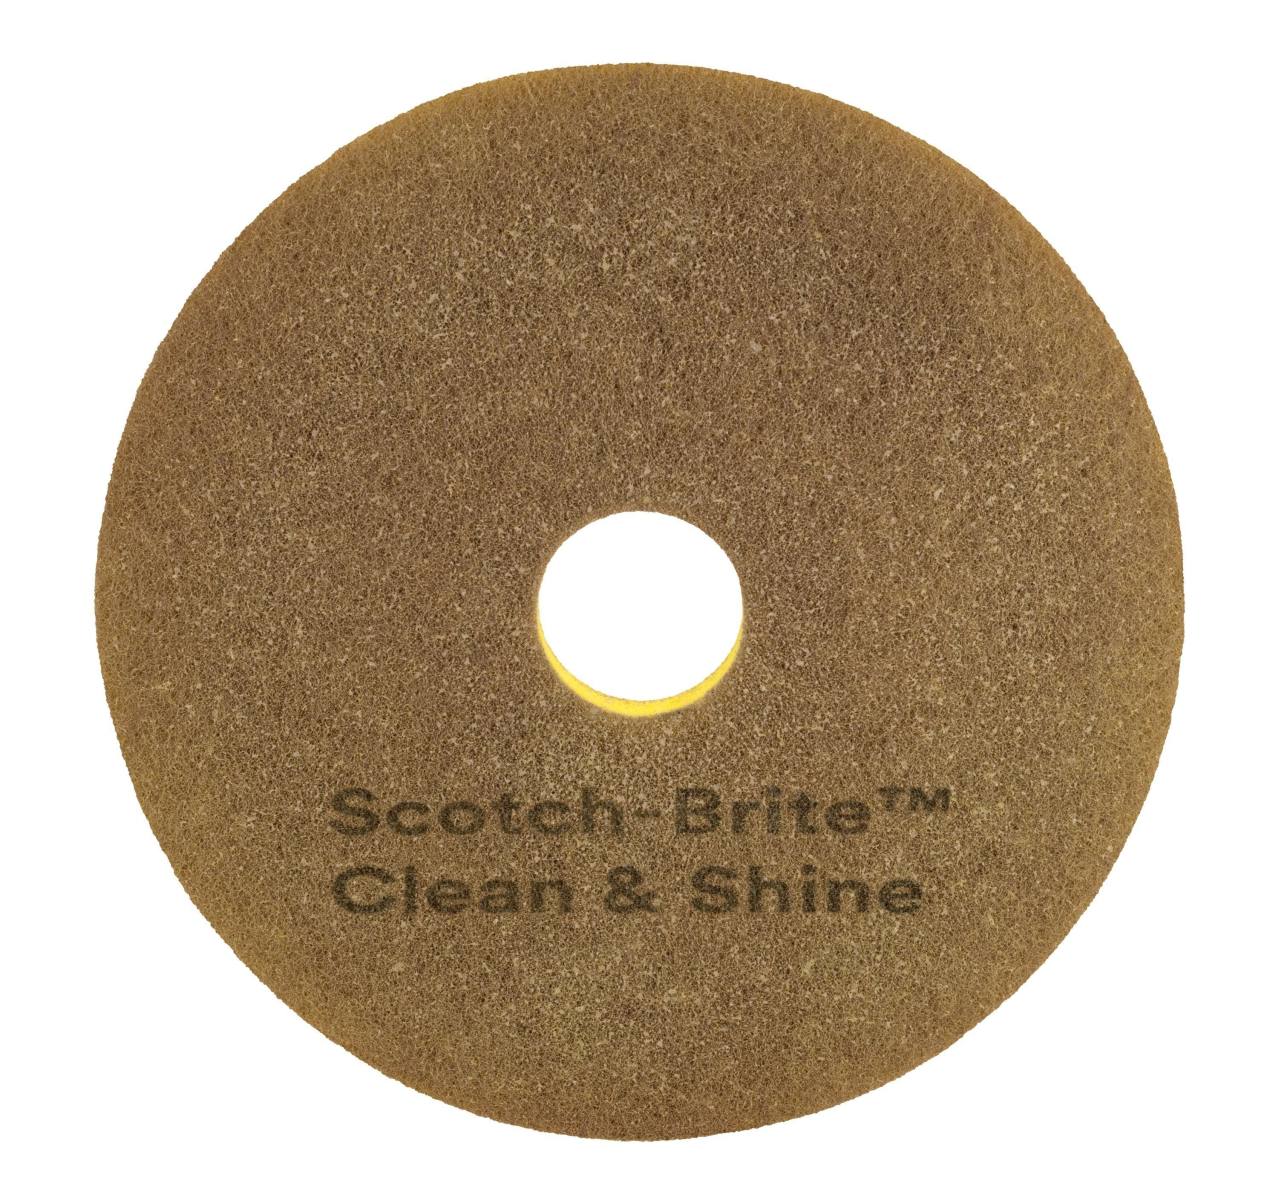 3M Scotch-Brite Clean & Shine Maschinenpad, 280 mm, 5 Stück / Karton